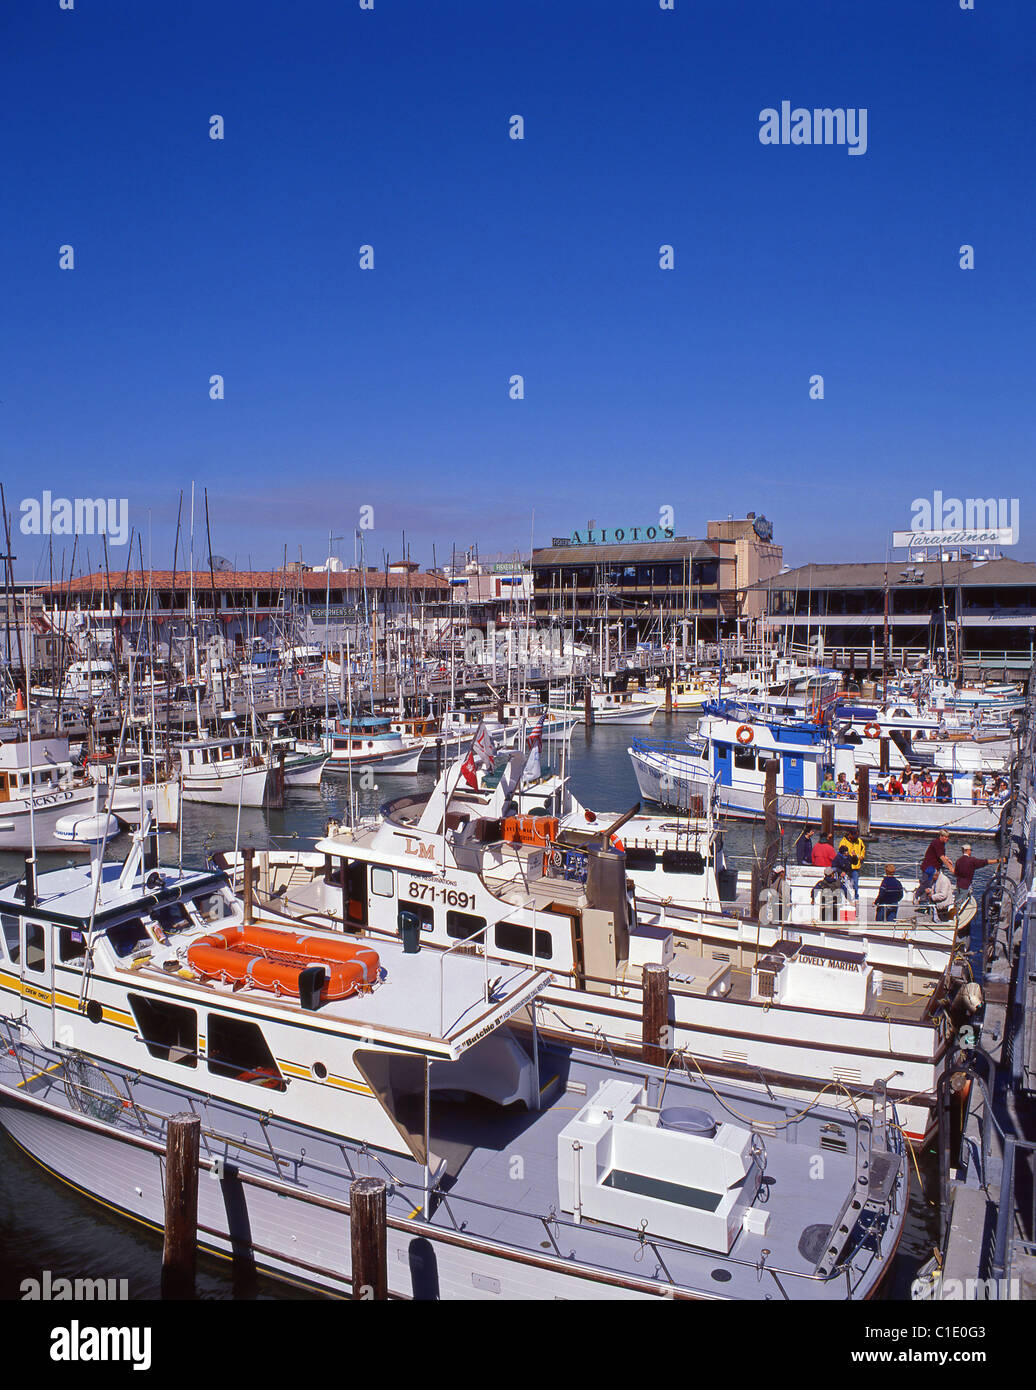 Boat marina at Fisherman's Wharf, San Francisco, California, United States of America Stock Photo